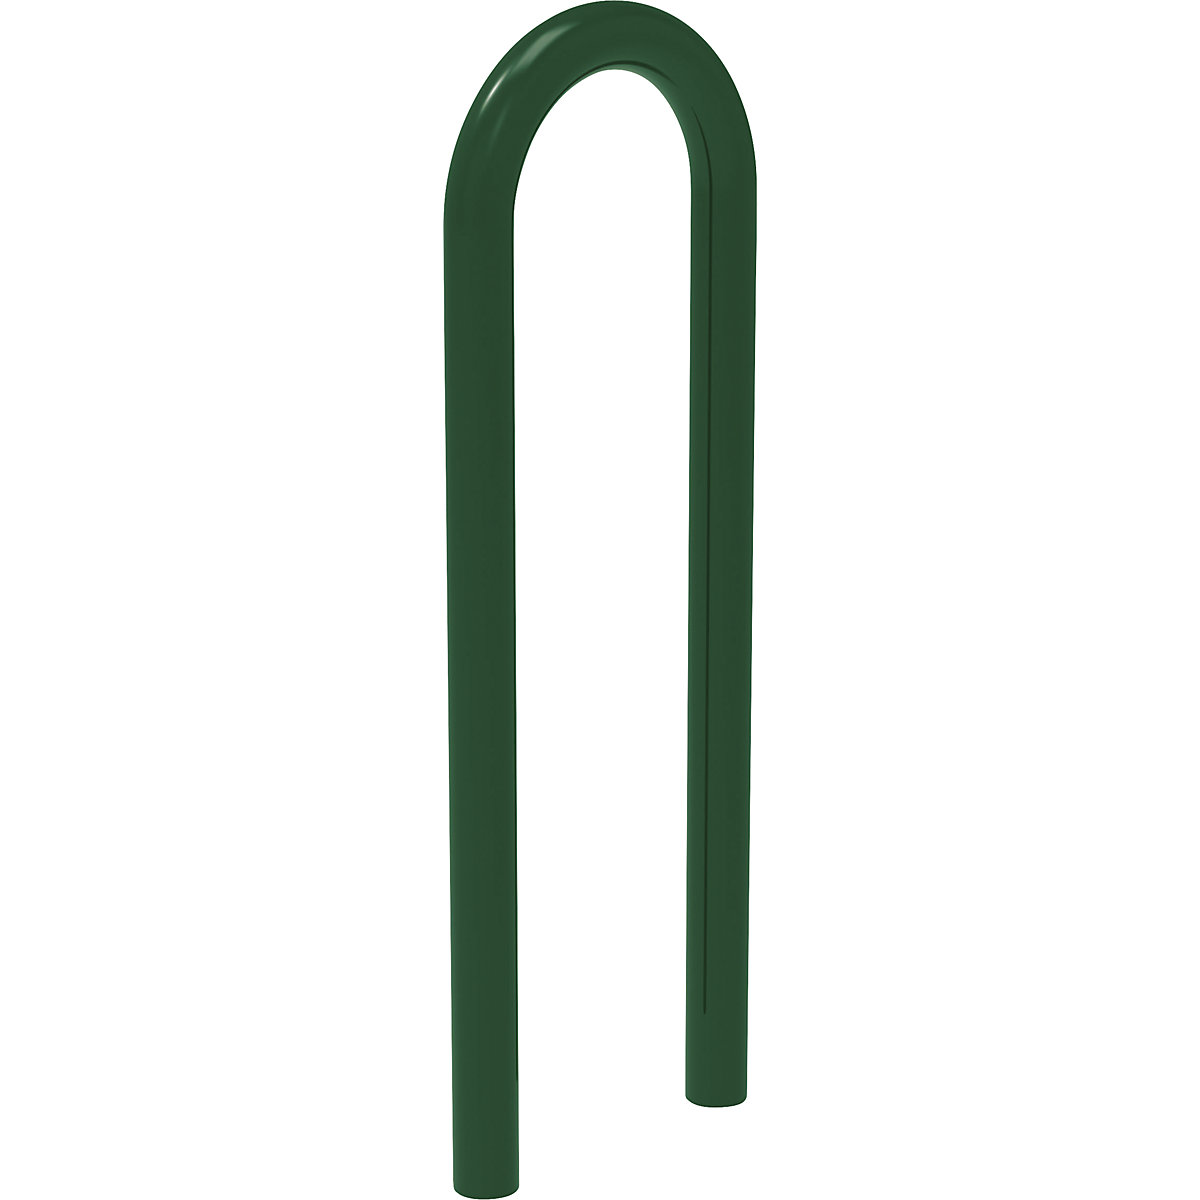 Prislonski lok BÜROKLAMMER – PROCITY, Ø 50 mm, mahovo zelene barve-1